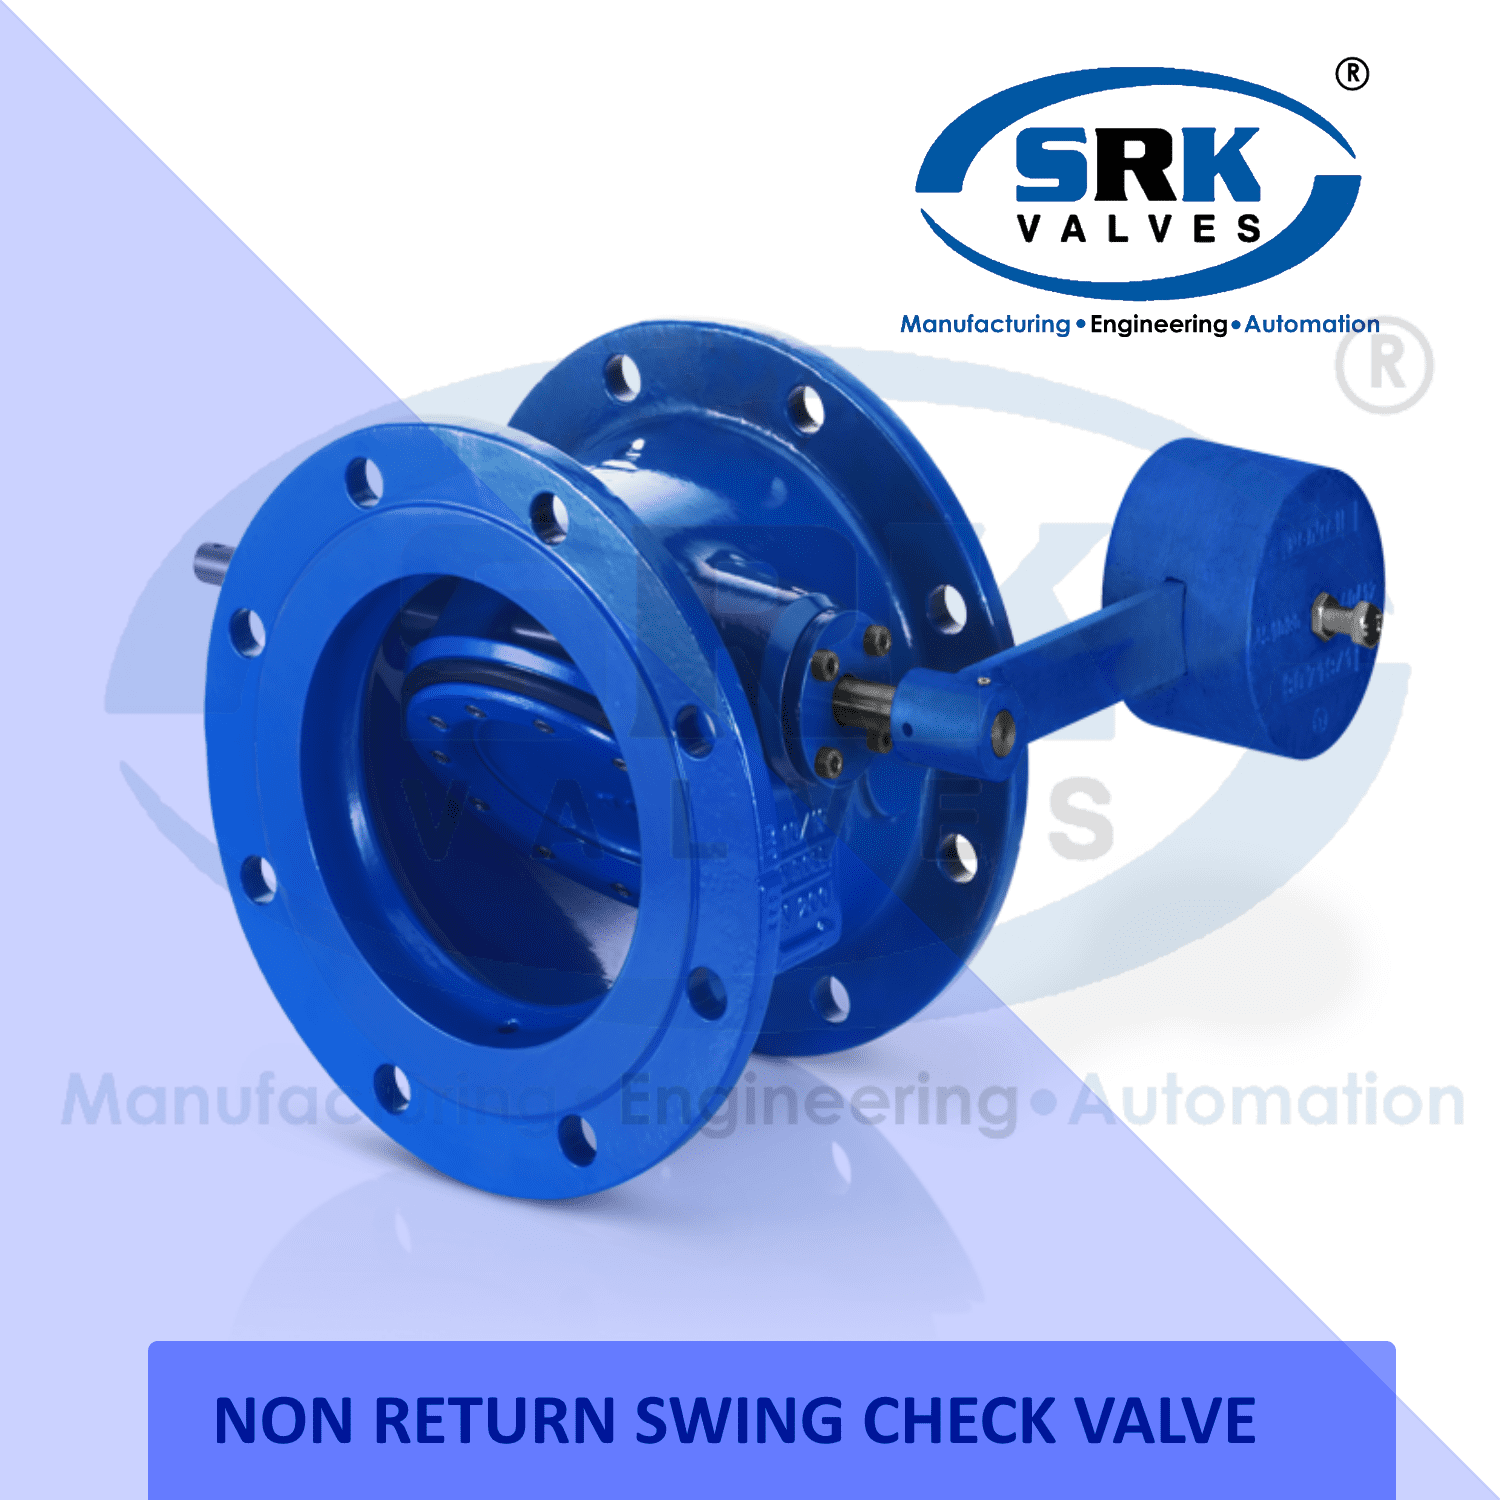 Non return swing check valve